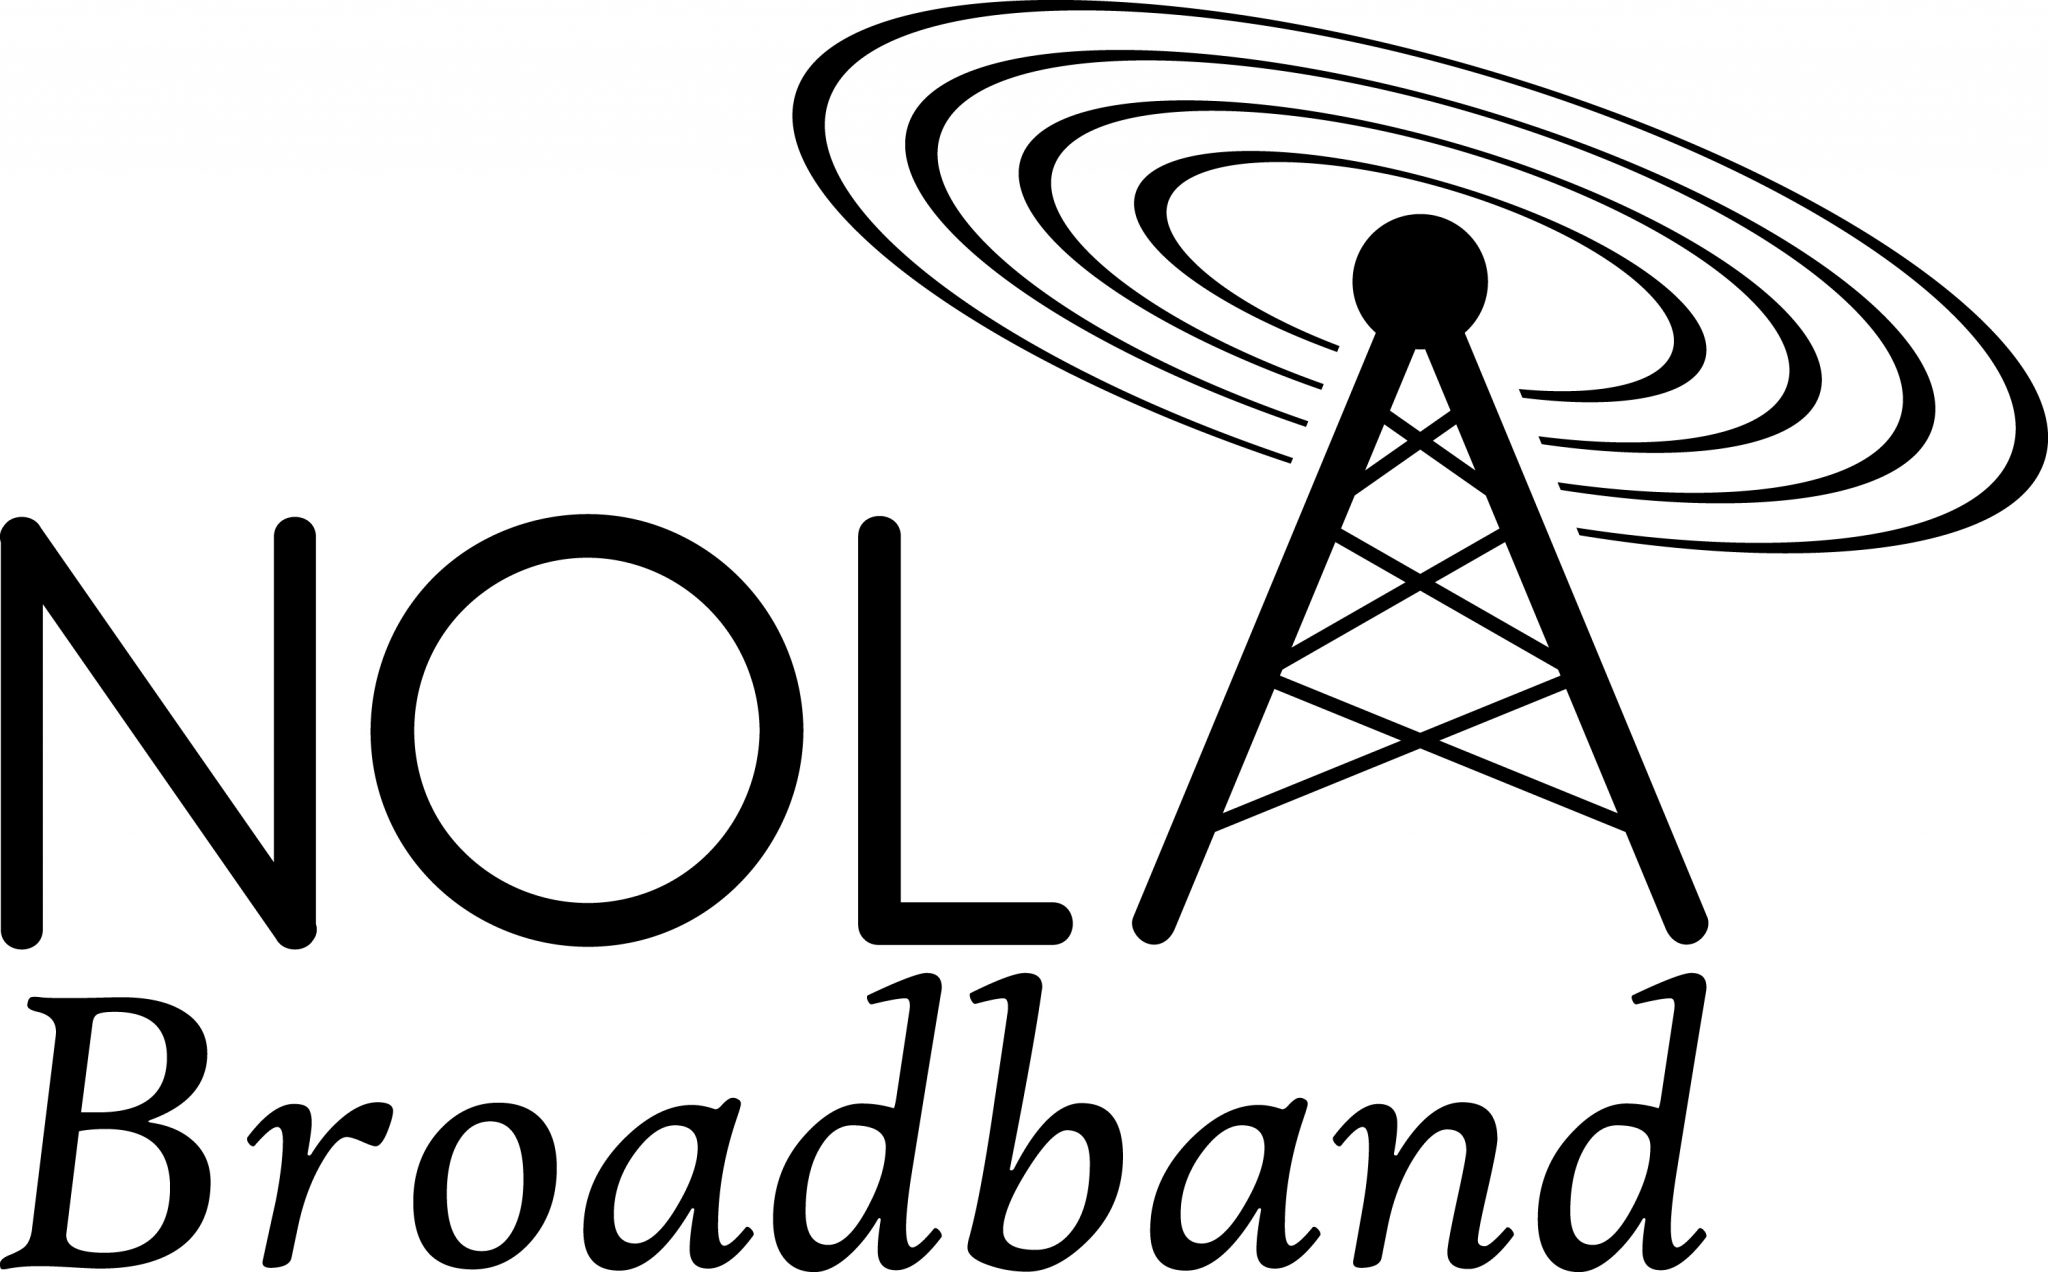 NOLA Broadband